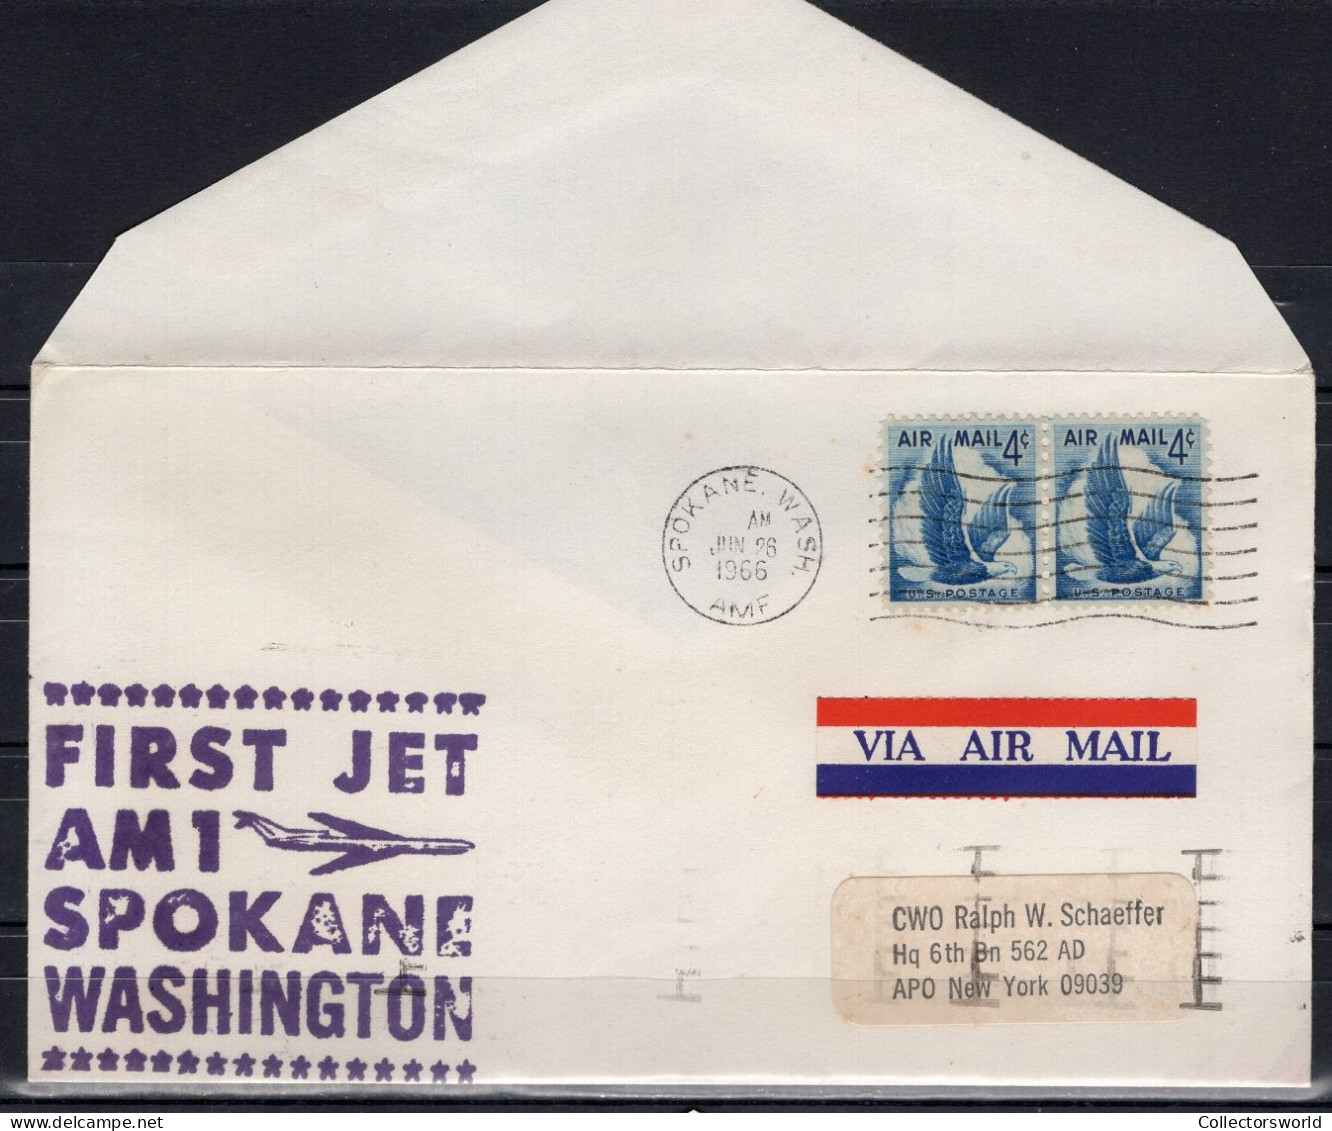 USA 1966 First Flight Cover First Jet AM1 Spokane - Washington Purple Ink - FDC